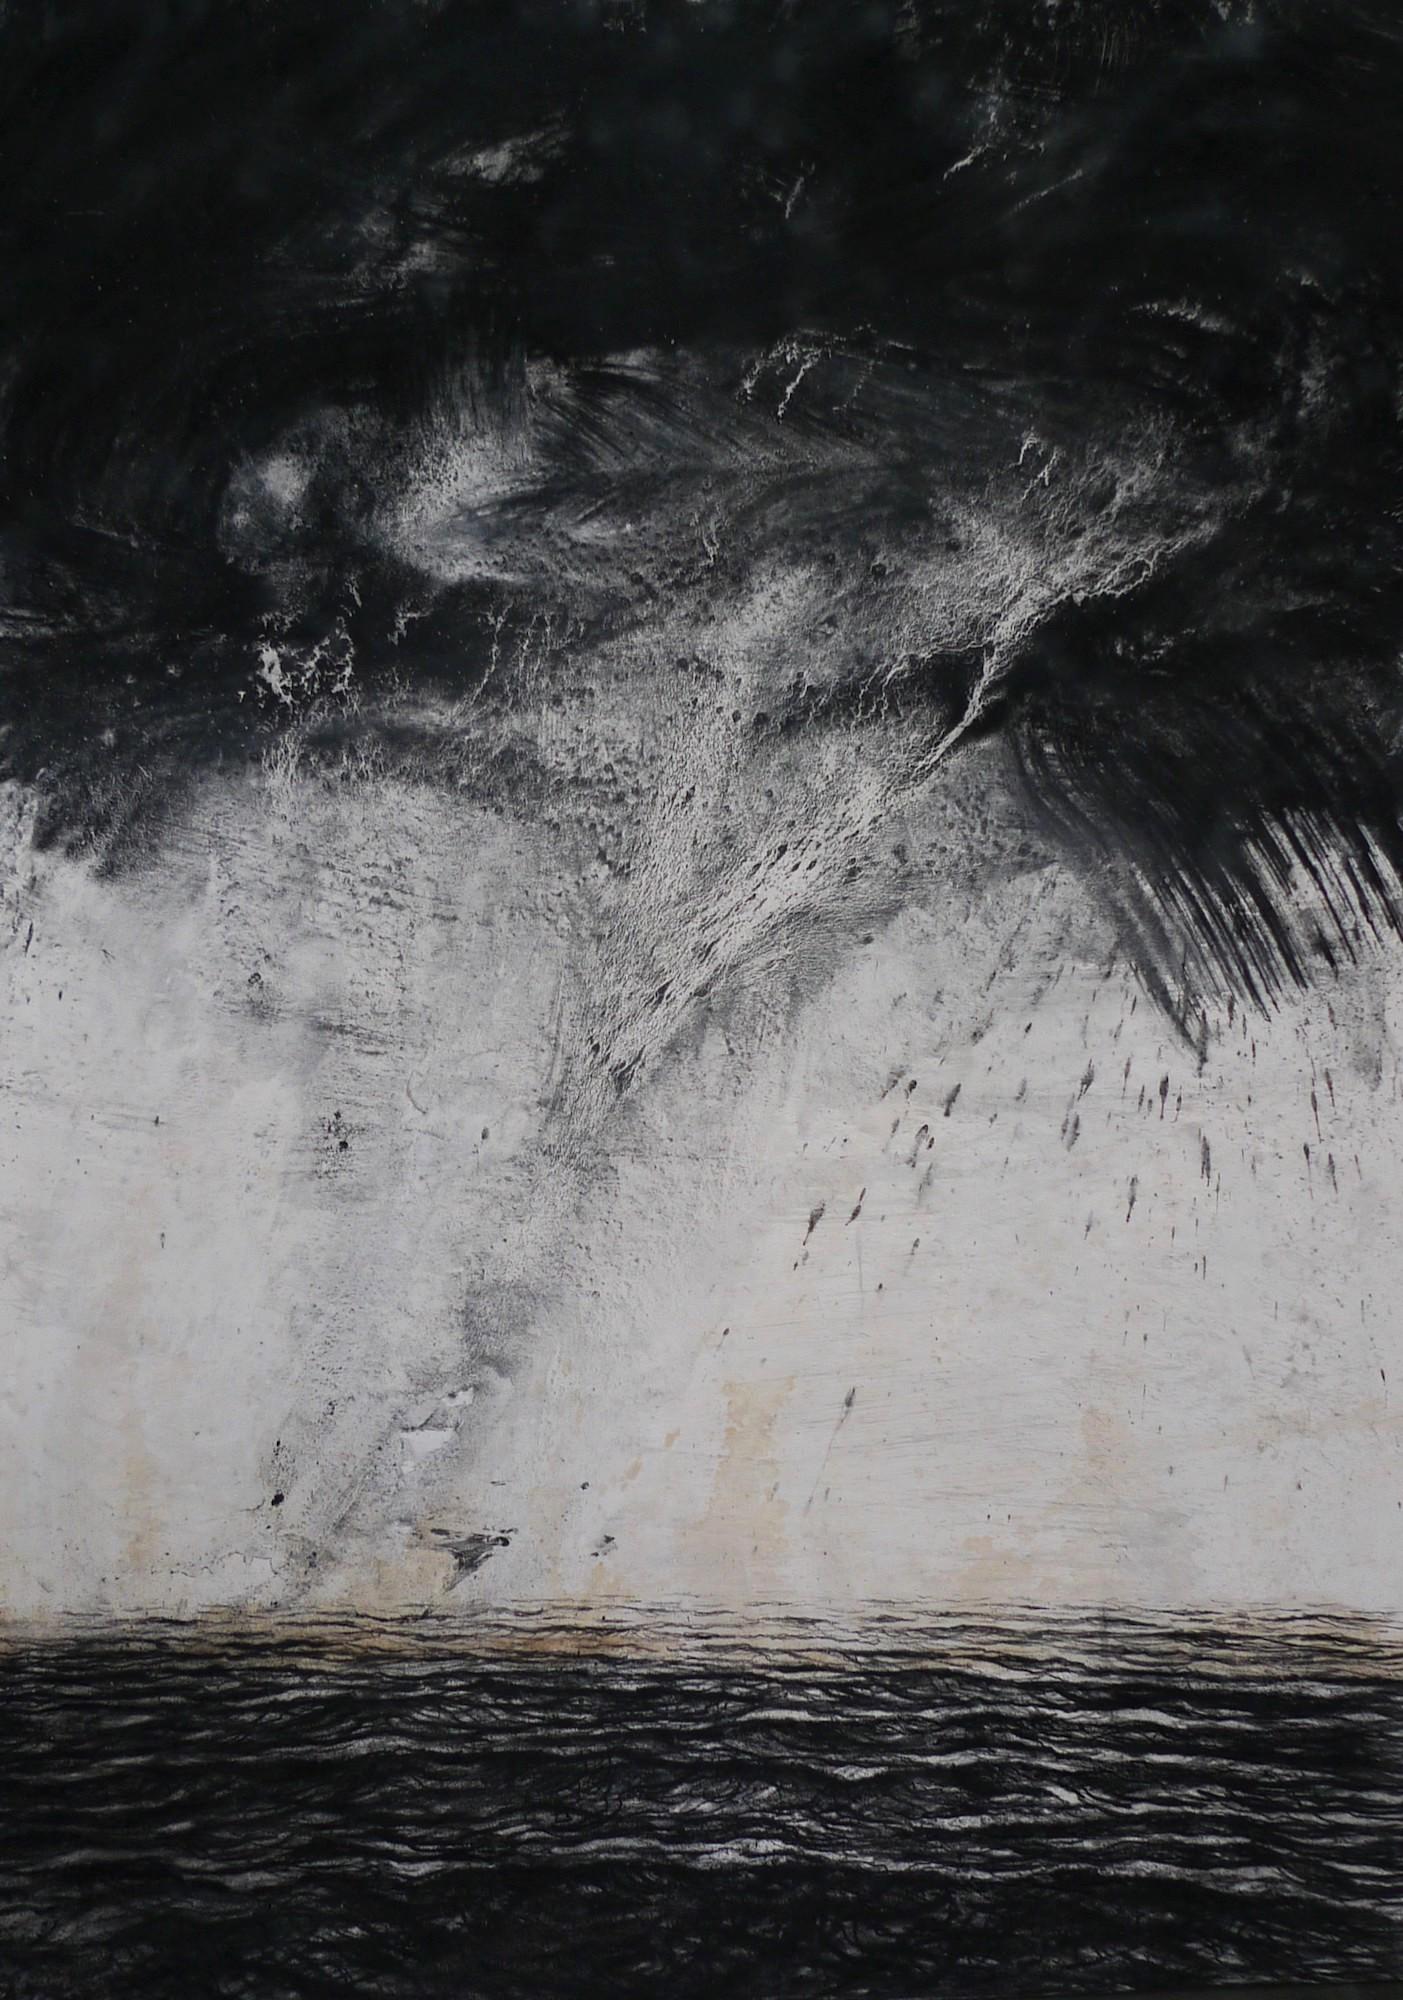 Cyclone by Franco Salas Borquez - Black & white painting, ocean waves, seascape